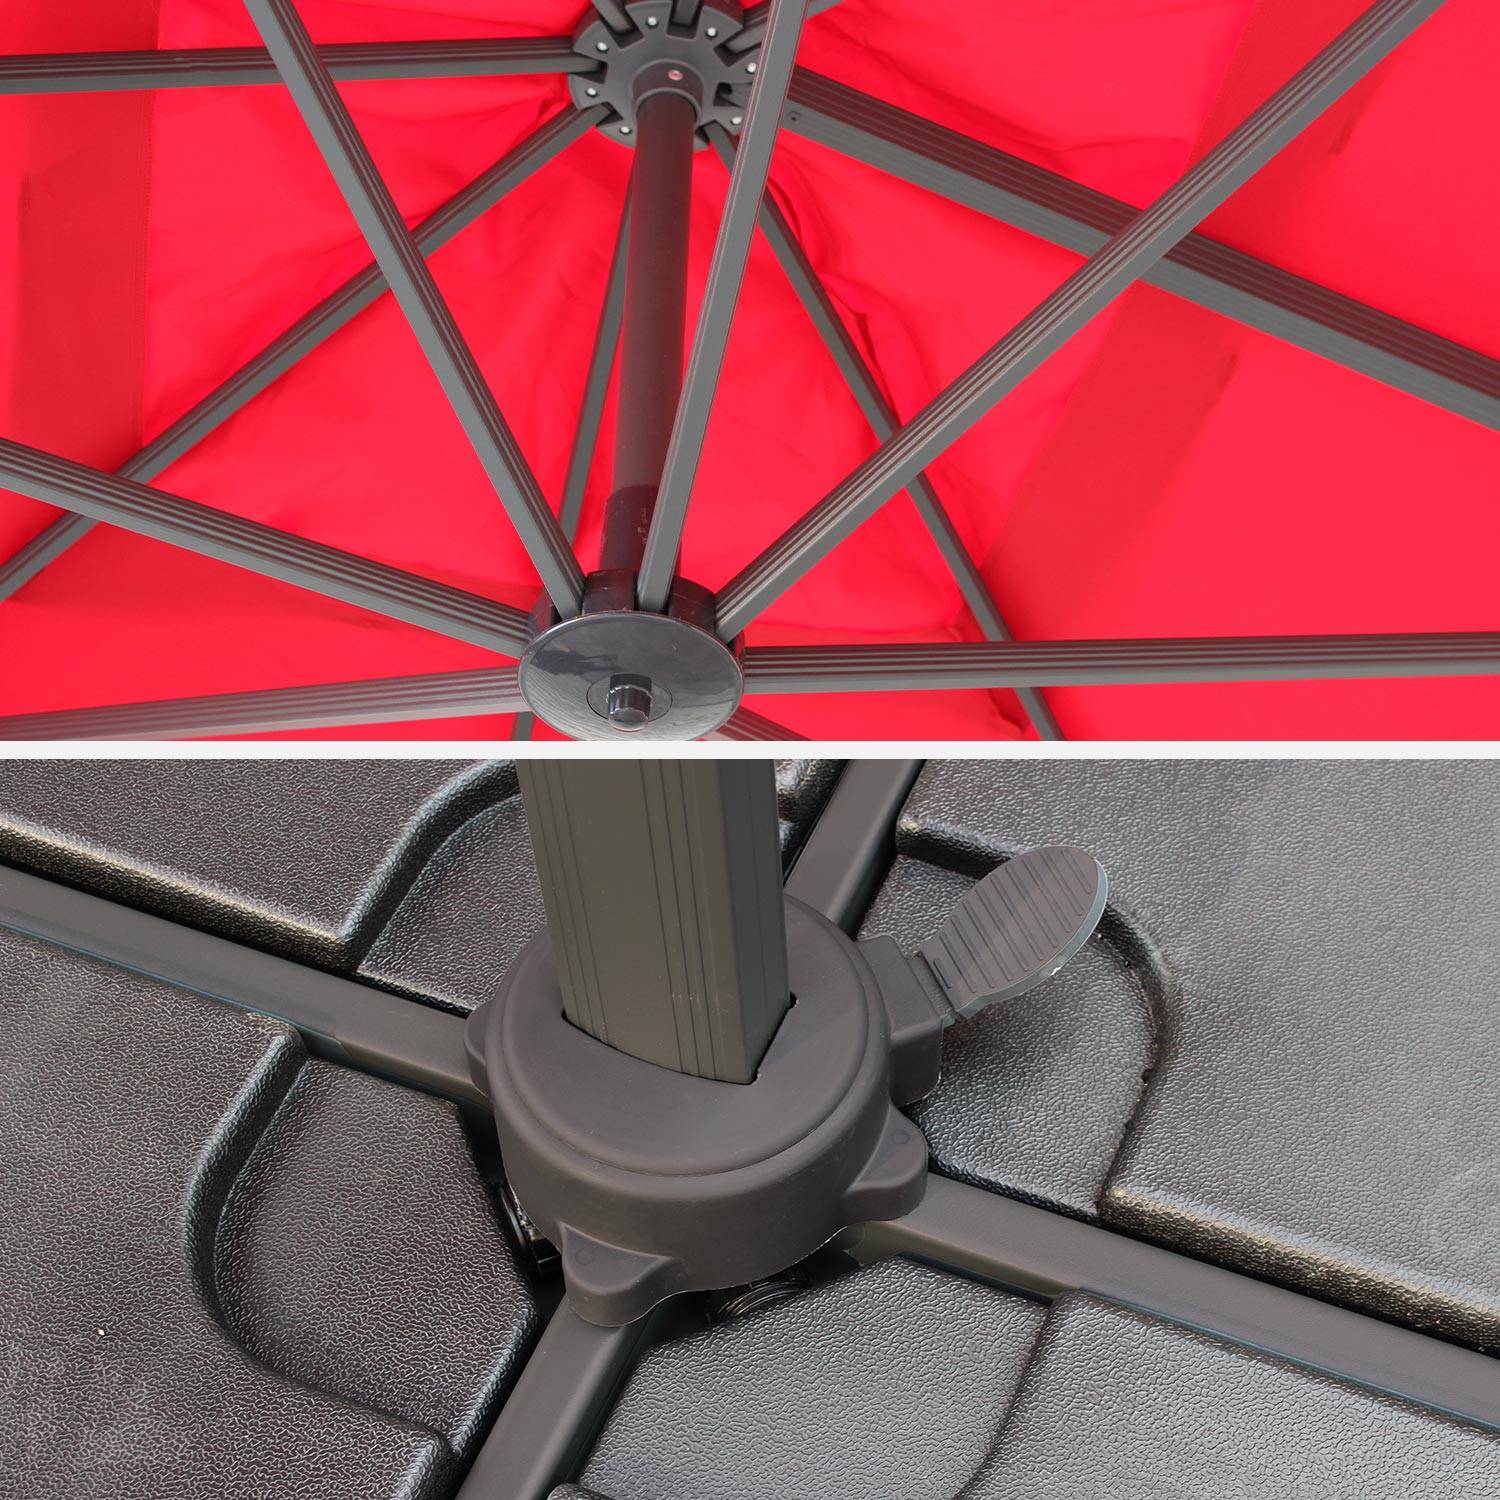 Rectangular cantilever parasol, 3x4m - Saint Jean de Luz - Red,sweeek,Photo6